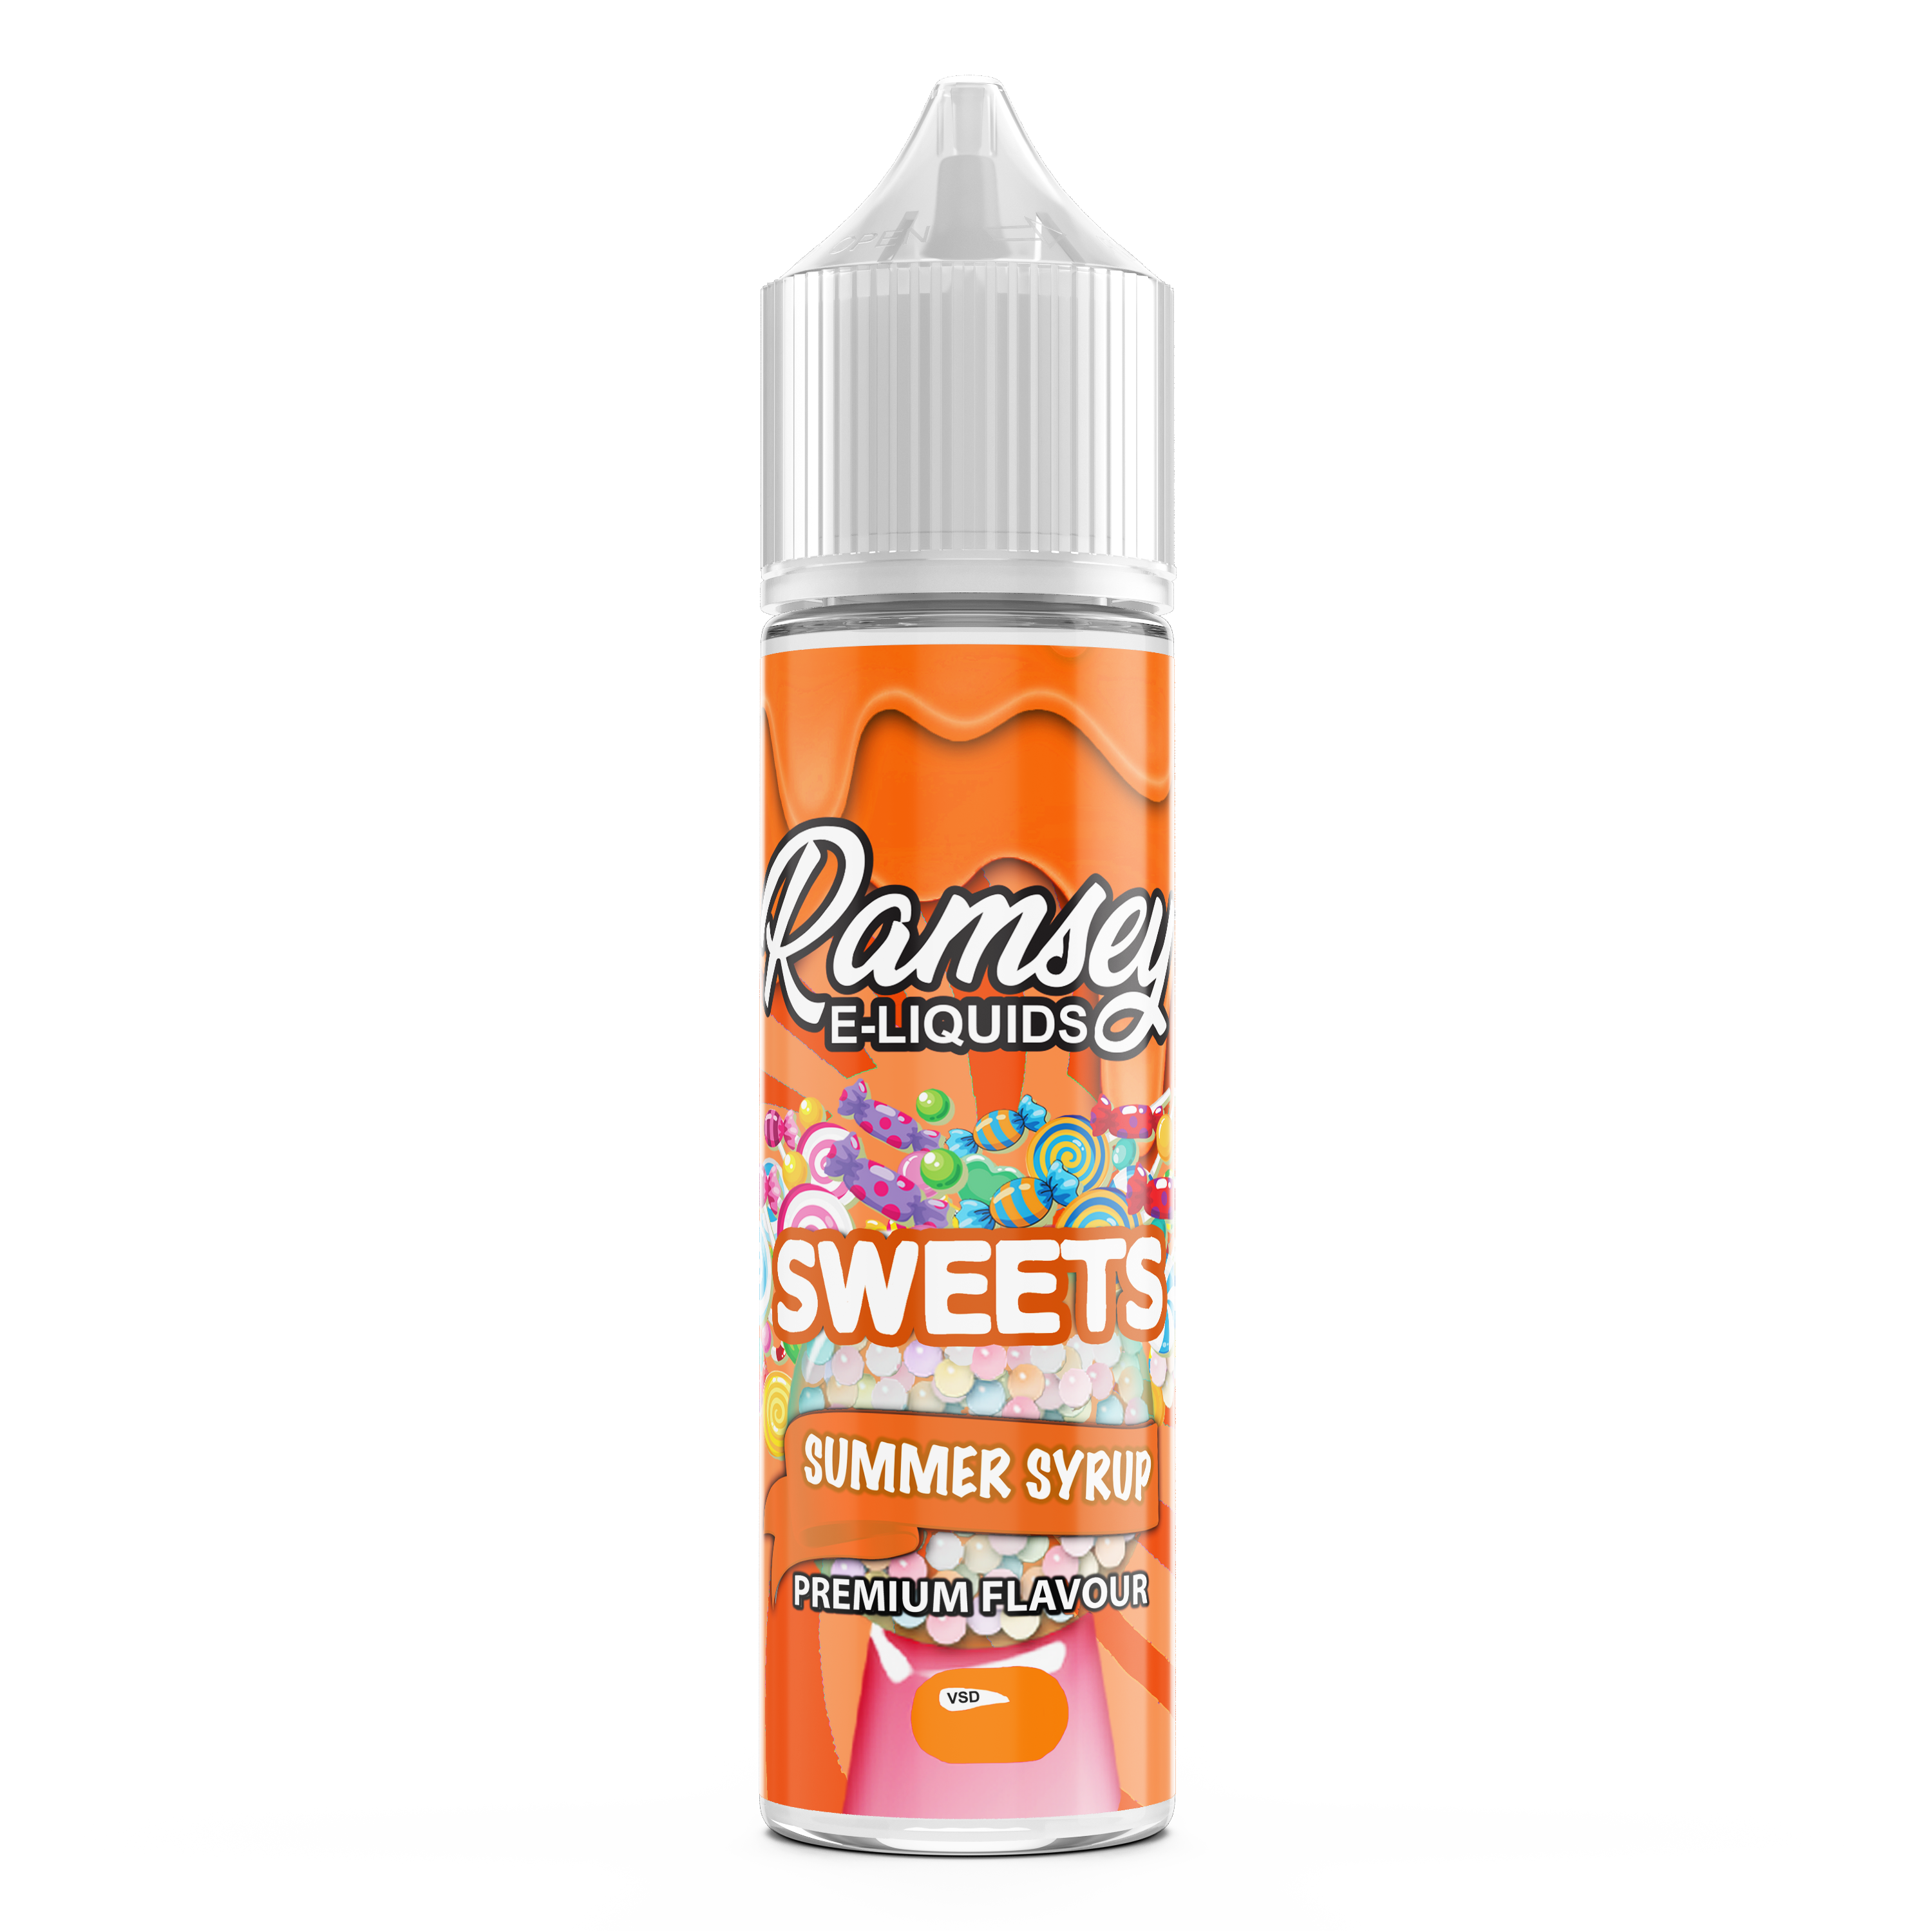 Ramsey E-Liquids Sweets: Summer Syrup 0mg 50ml Shortfill E-Liquid